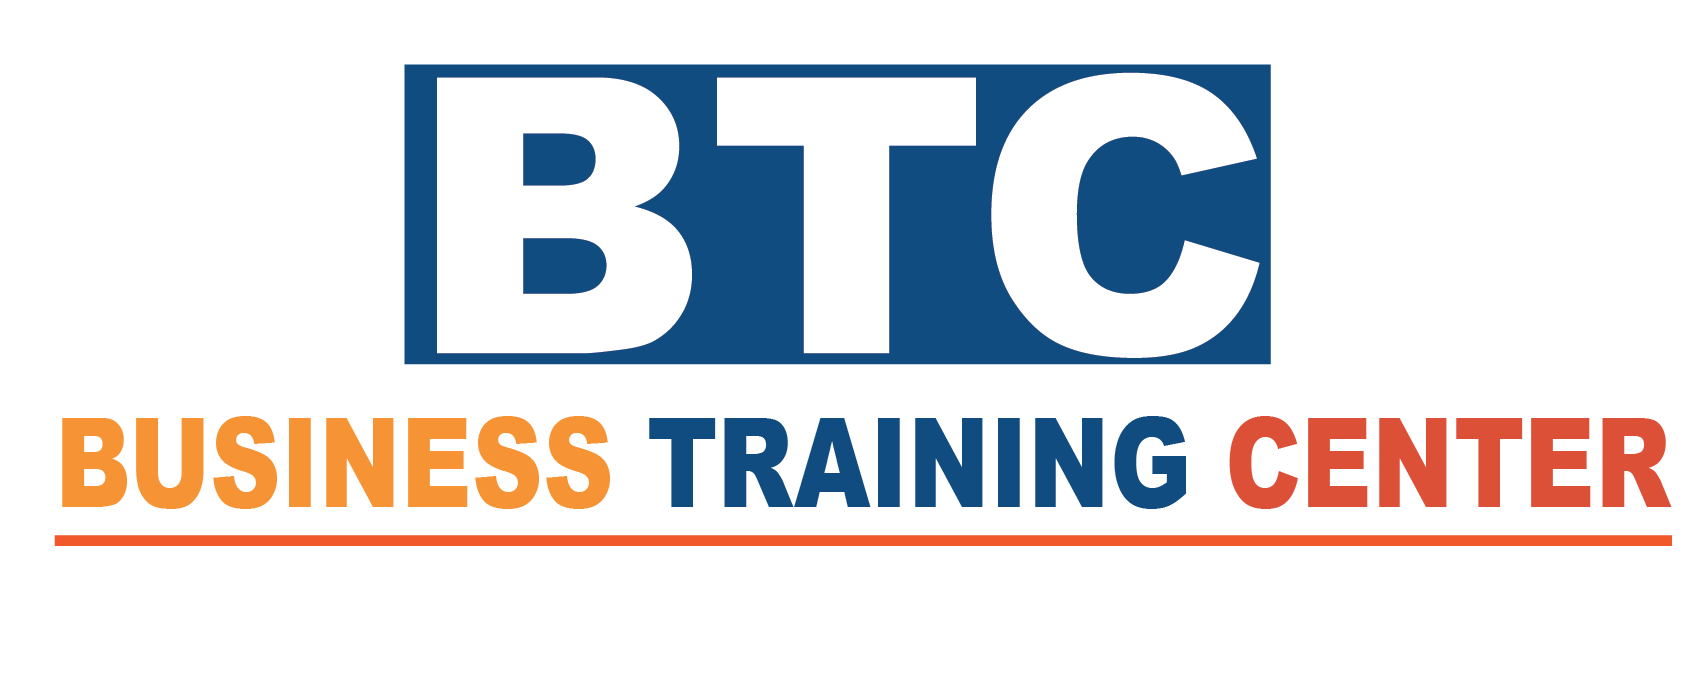 btc training center trading bot 2021